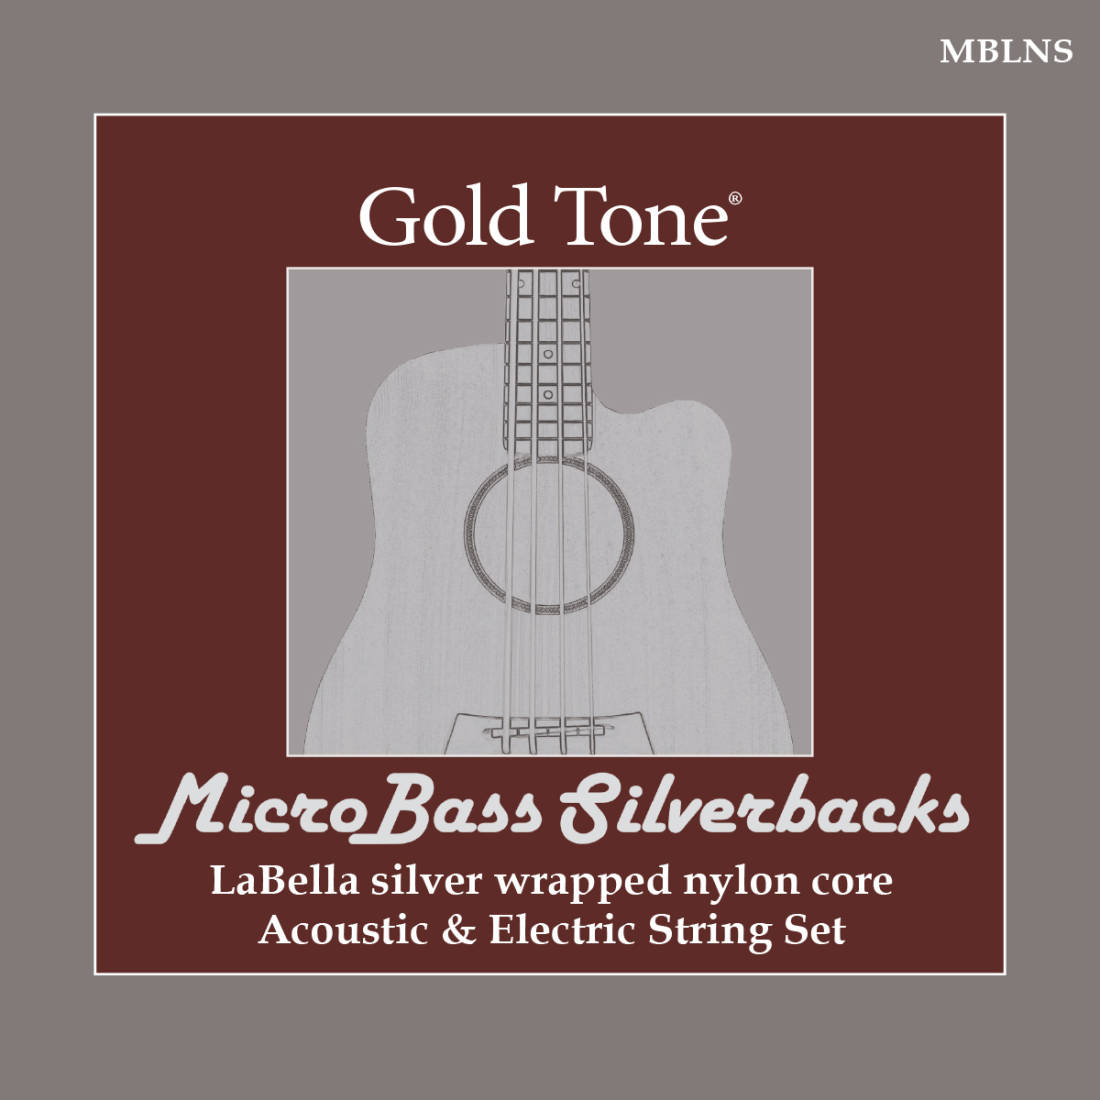 Microbass \'\'Silverbacks\'\' Silver-Wrapped Nylon Strings 49-115